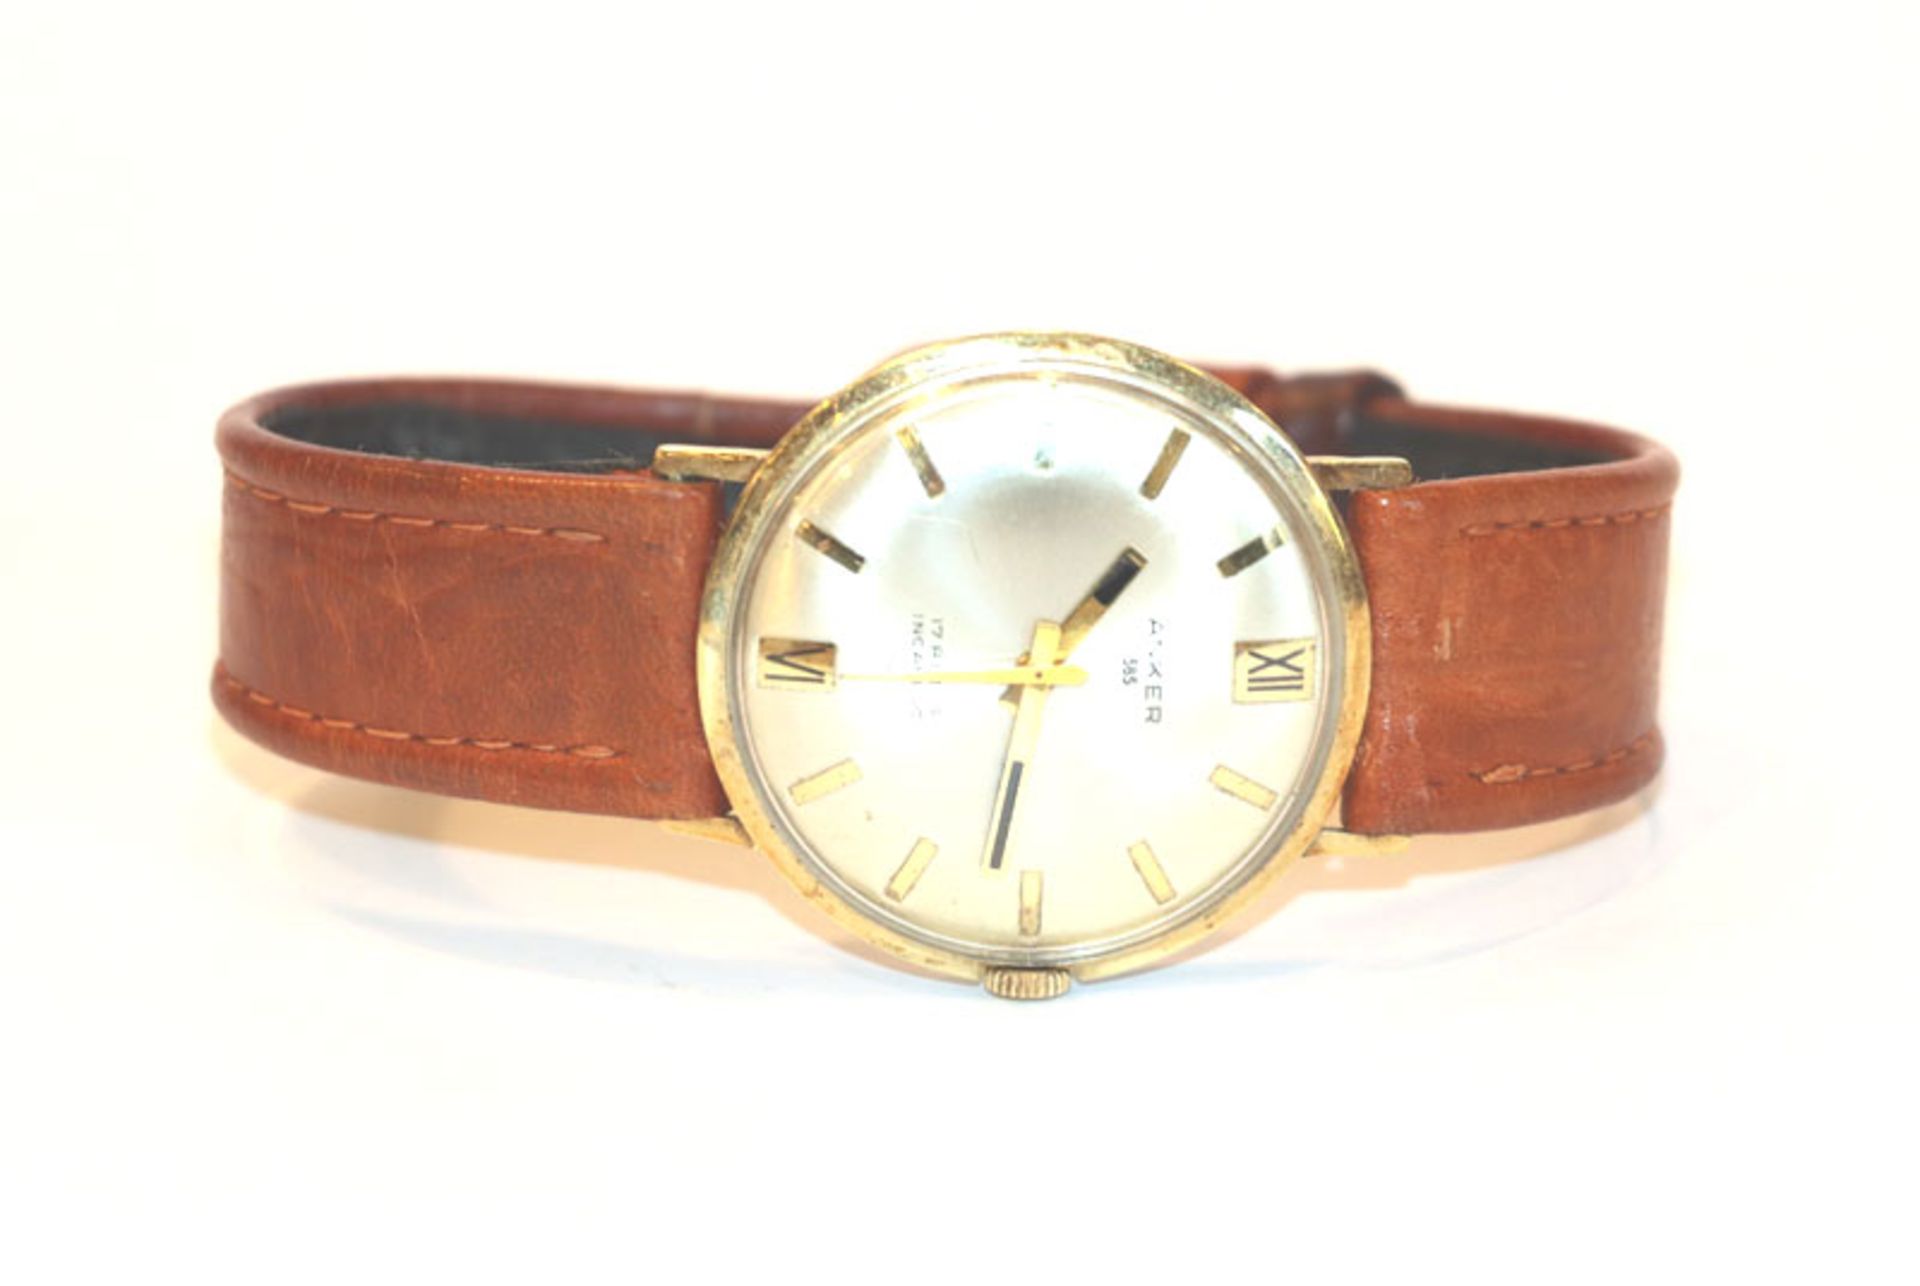 14 k Gelbgold Herren-Armbanduhr, Anker, intakt, an braunem Leder-Armband, Tragespuren